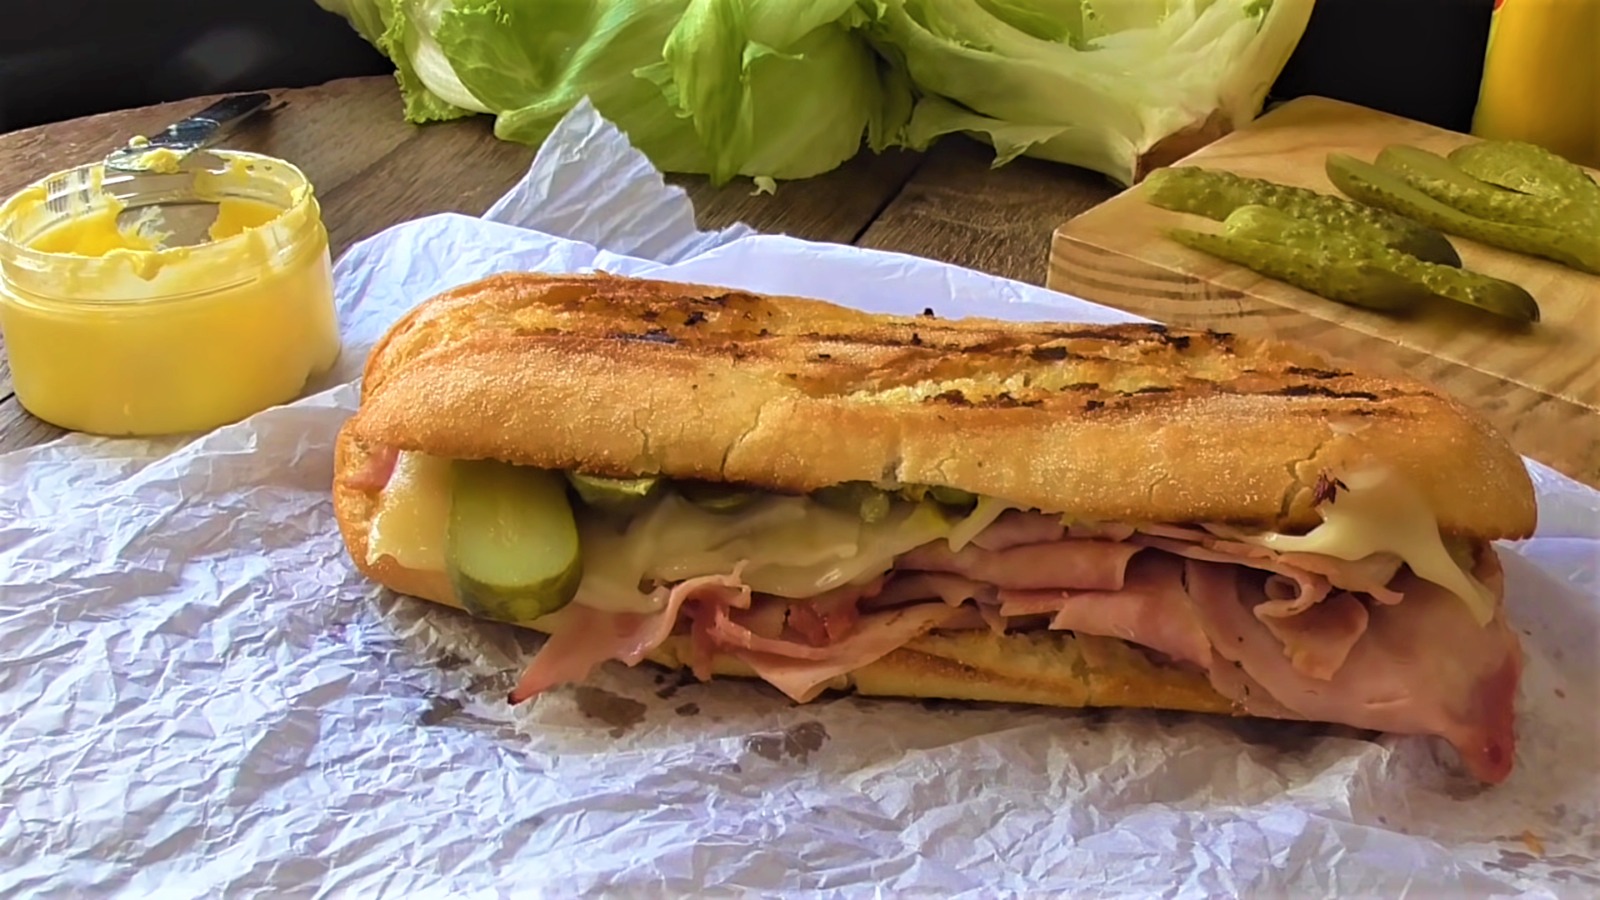 https://www.periodicocubano.com/wp-content/uploads/2019/02/Sandwich-cubano-receta.jpeg